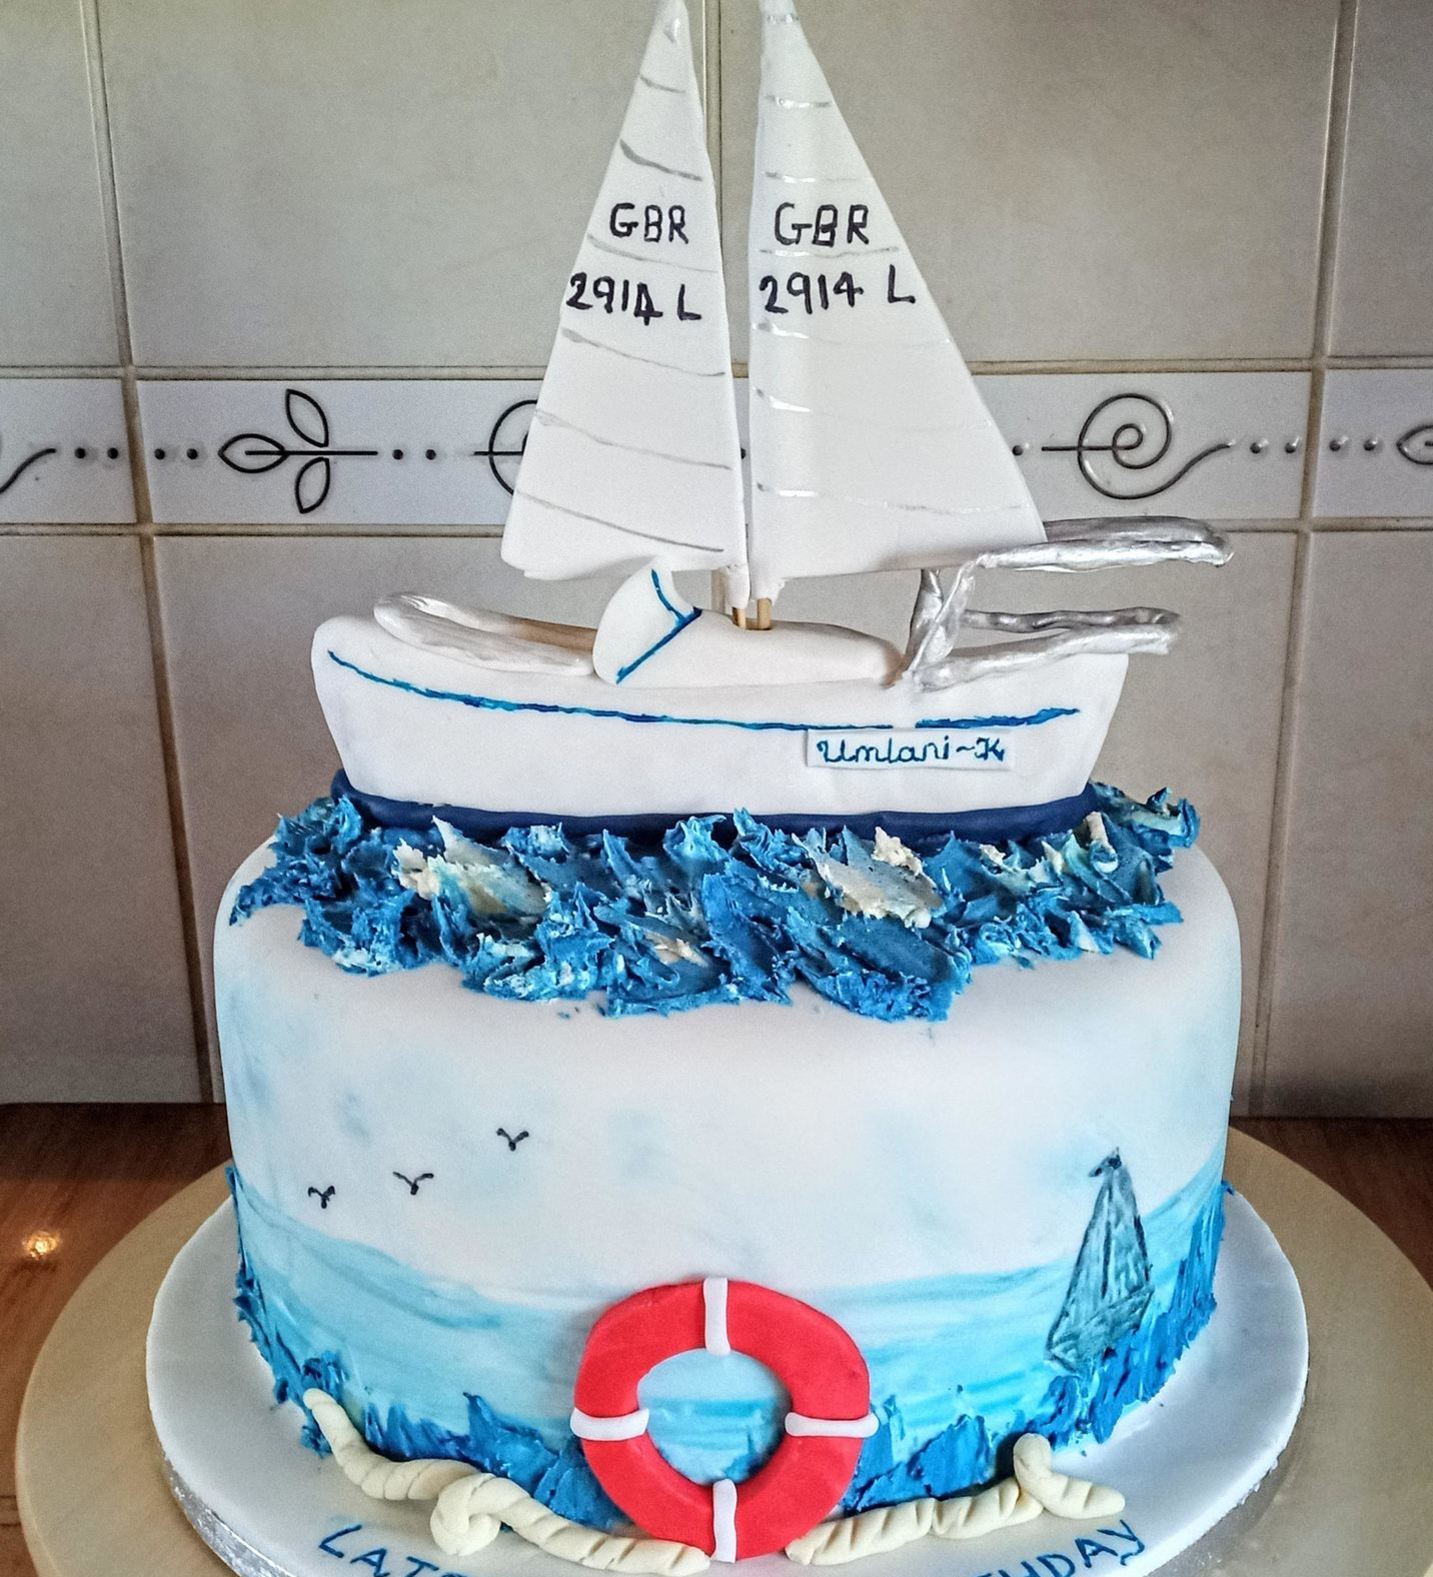 Novelty birthday cake with yacht cake topper